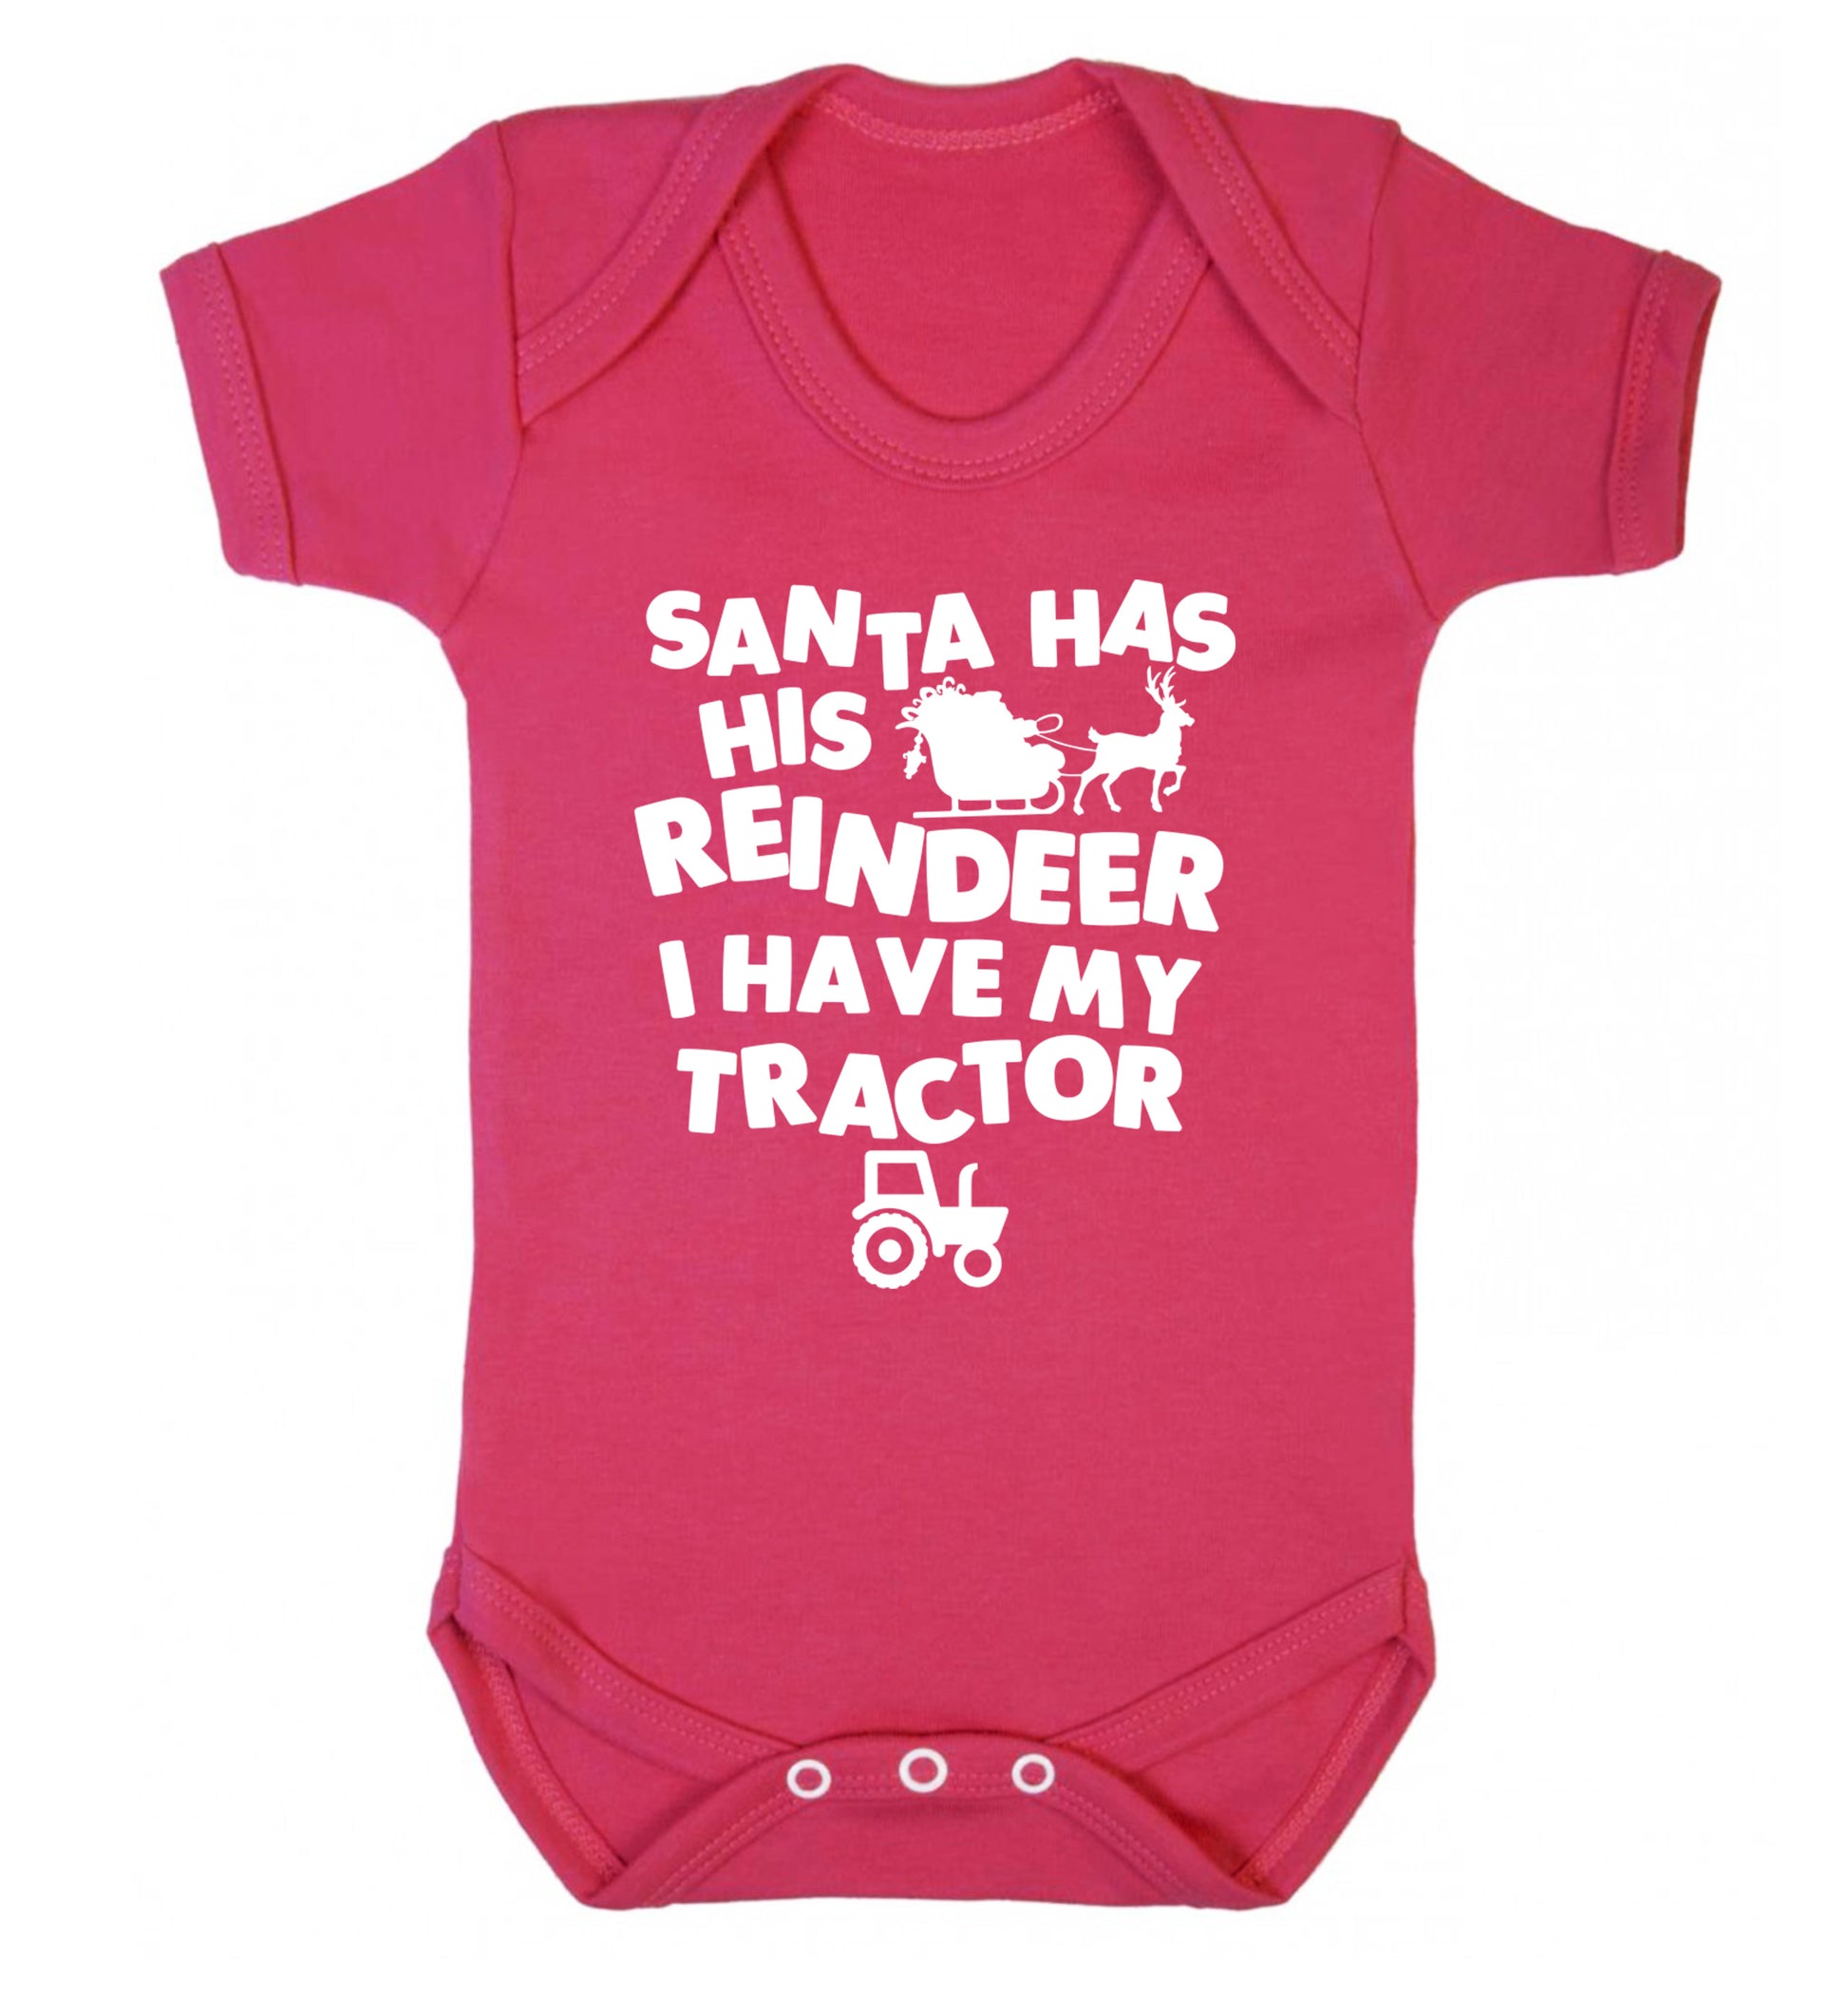 Santa has his reindeer I have my tractor Baby Vest dark pink 18-24 months